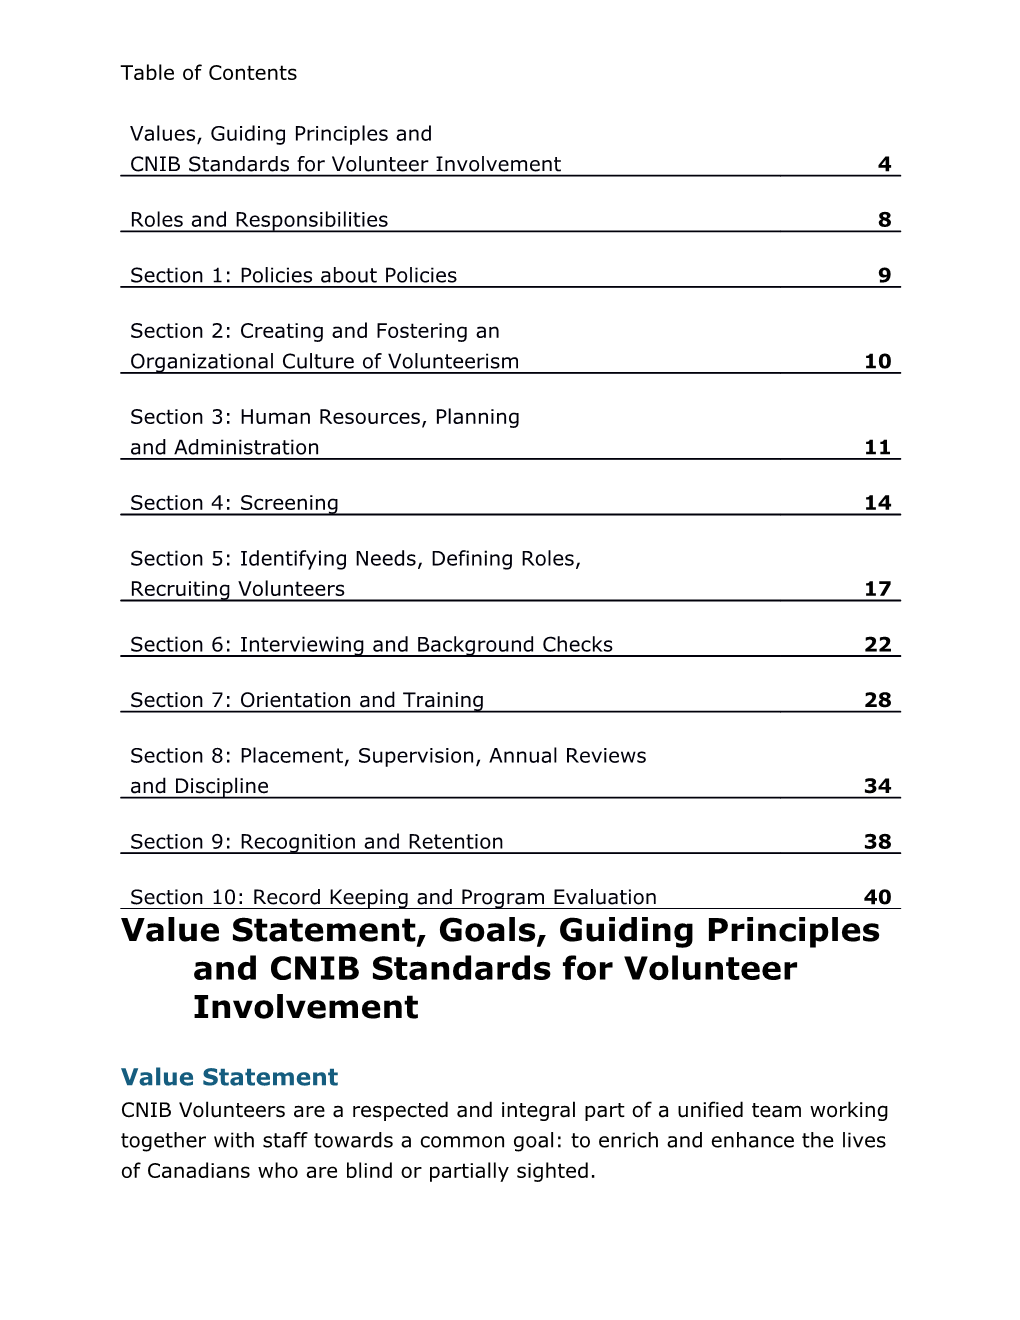 Value Statement, Goals, Guiding Principles Andcnib Standards for Volunteer Involvement